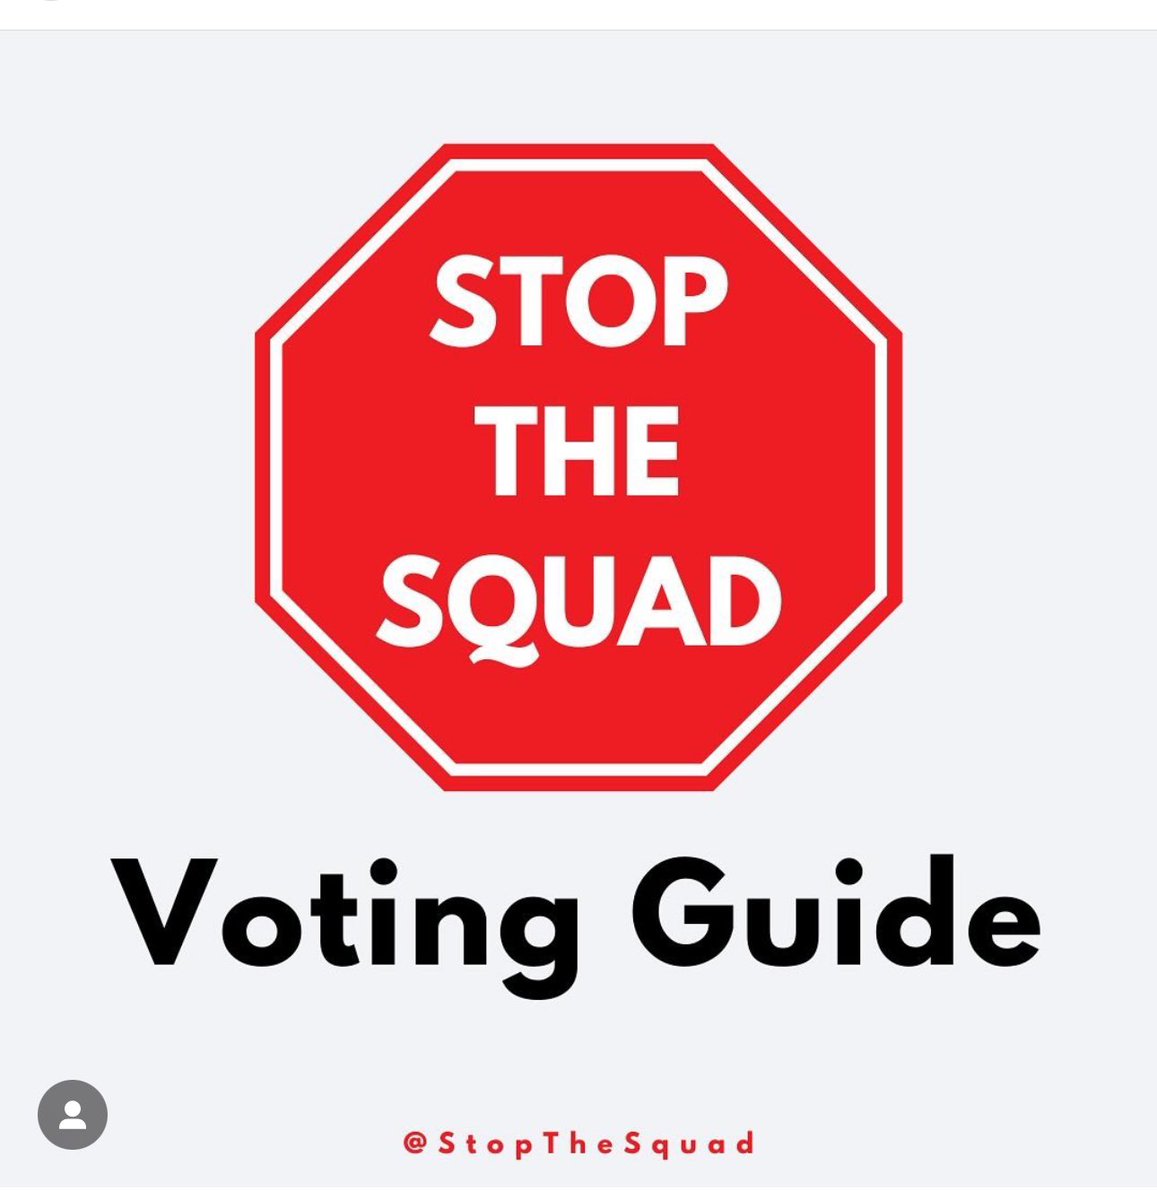 instagram.com/p/C51k44EvJfP/…
@stop_the_squad #STOPTHESQUAD #VOTETHEMOUT #EndJewHatred #StopAntisemitism #HamasAreTerrorists